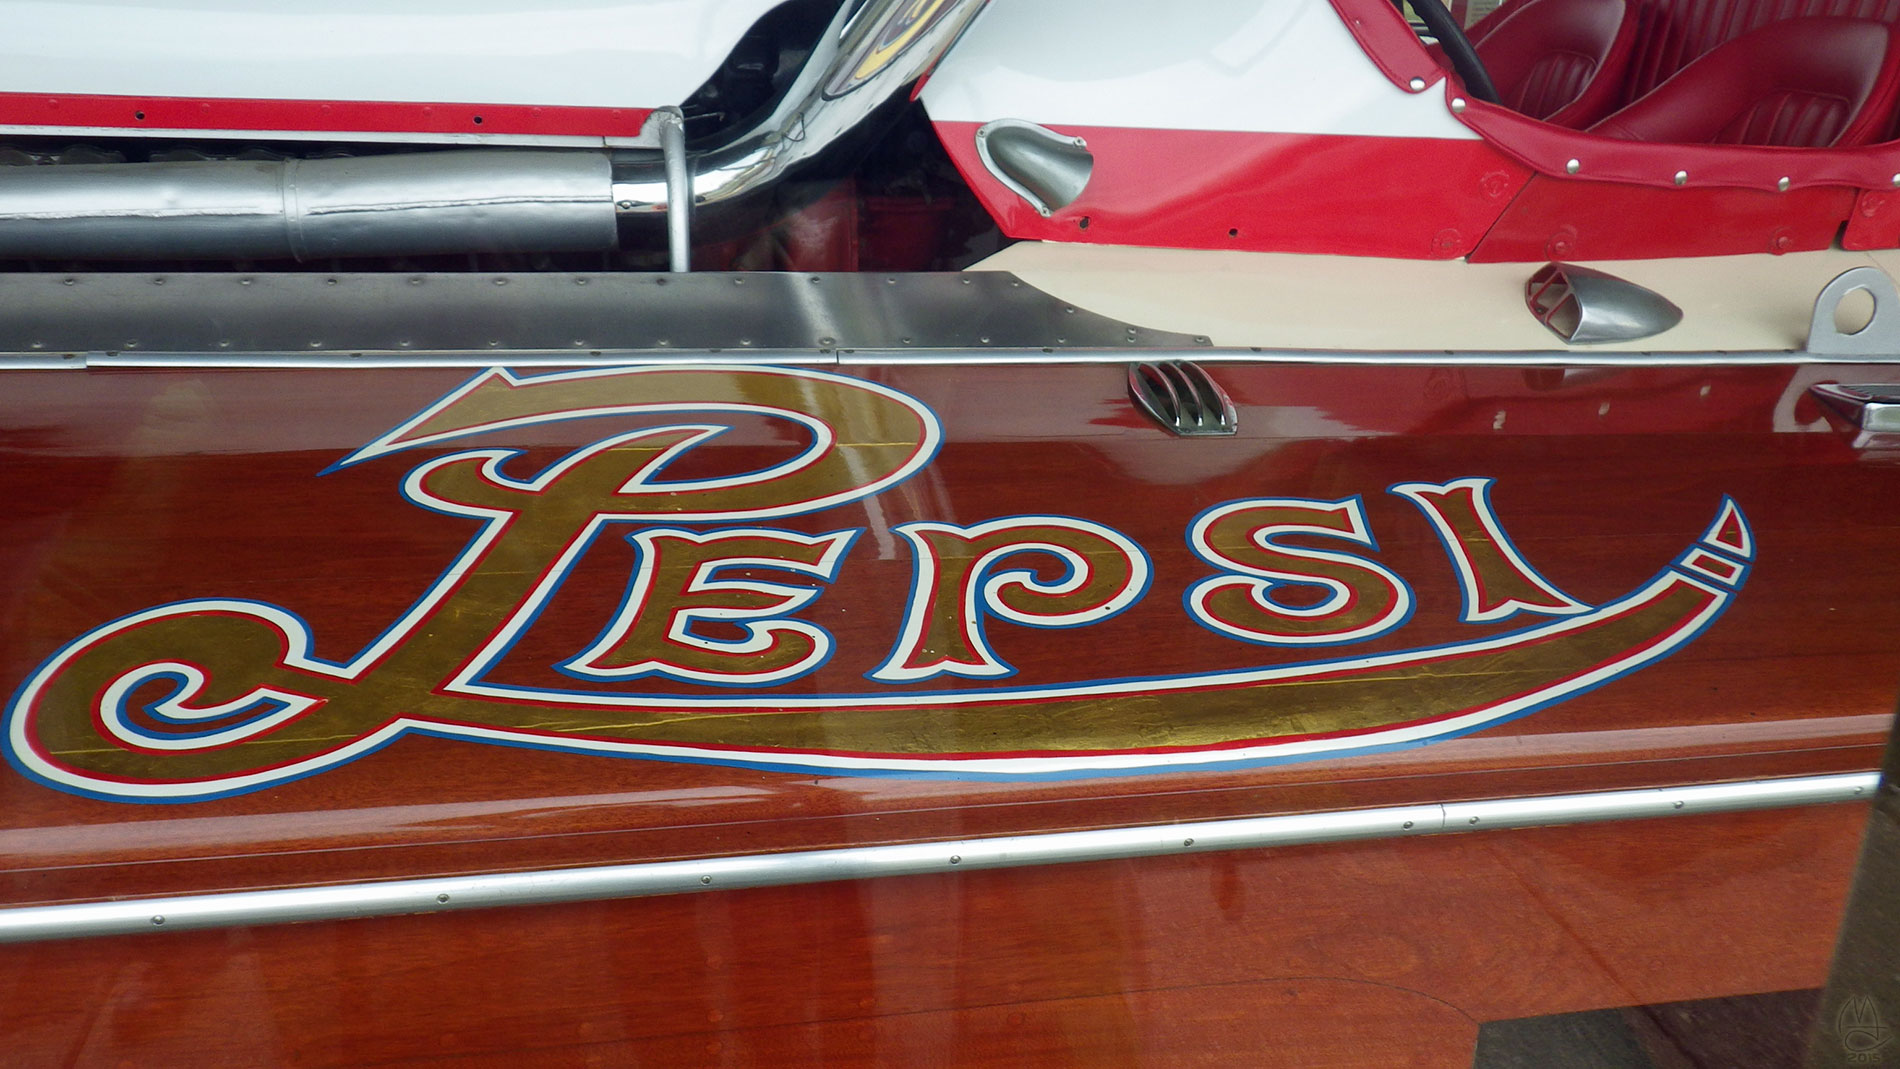 Miss Pepsi Raceboat, Dossin Great Lakes Museum, Belle Isle